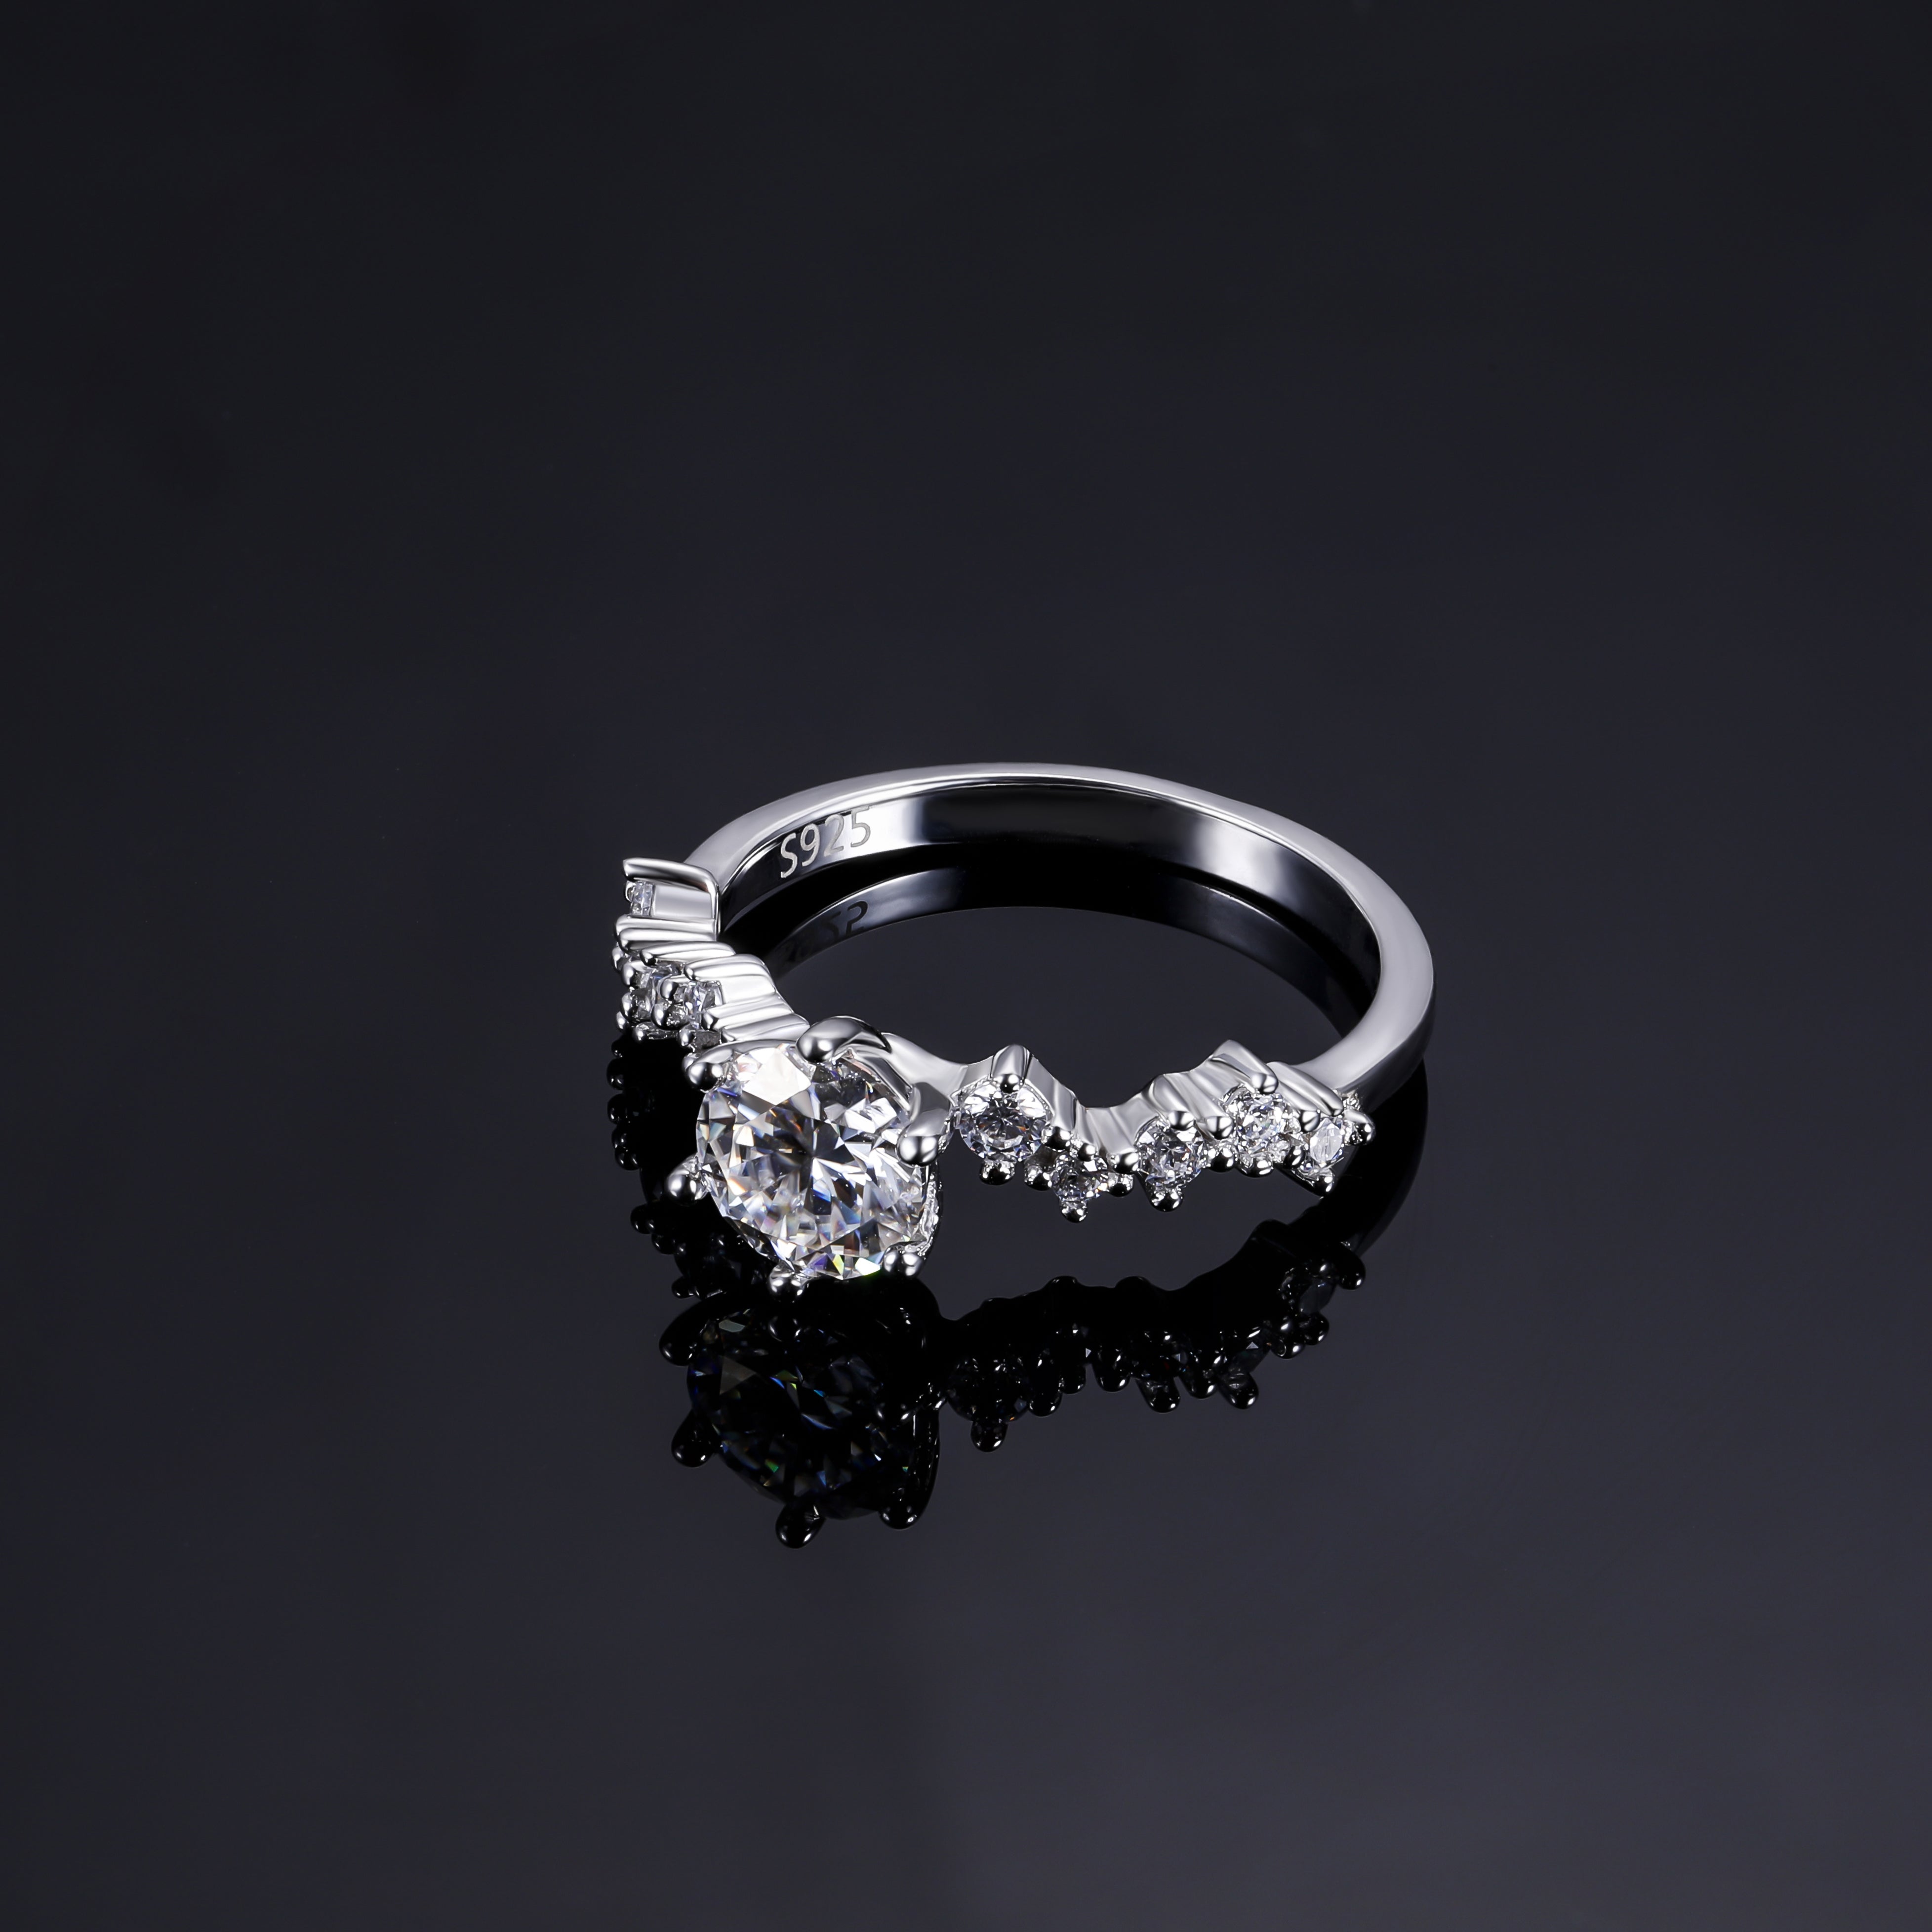 moissanite ring, s925 silver rings, affordable luxury rings, s915 rings for women